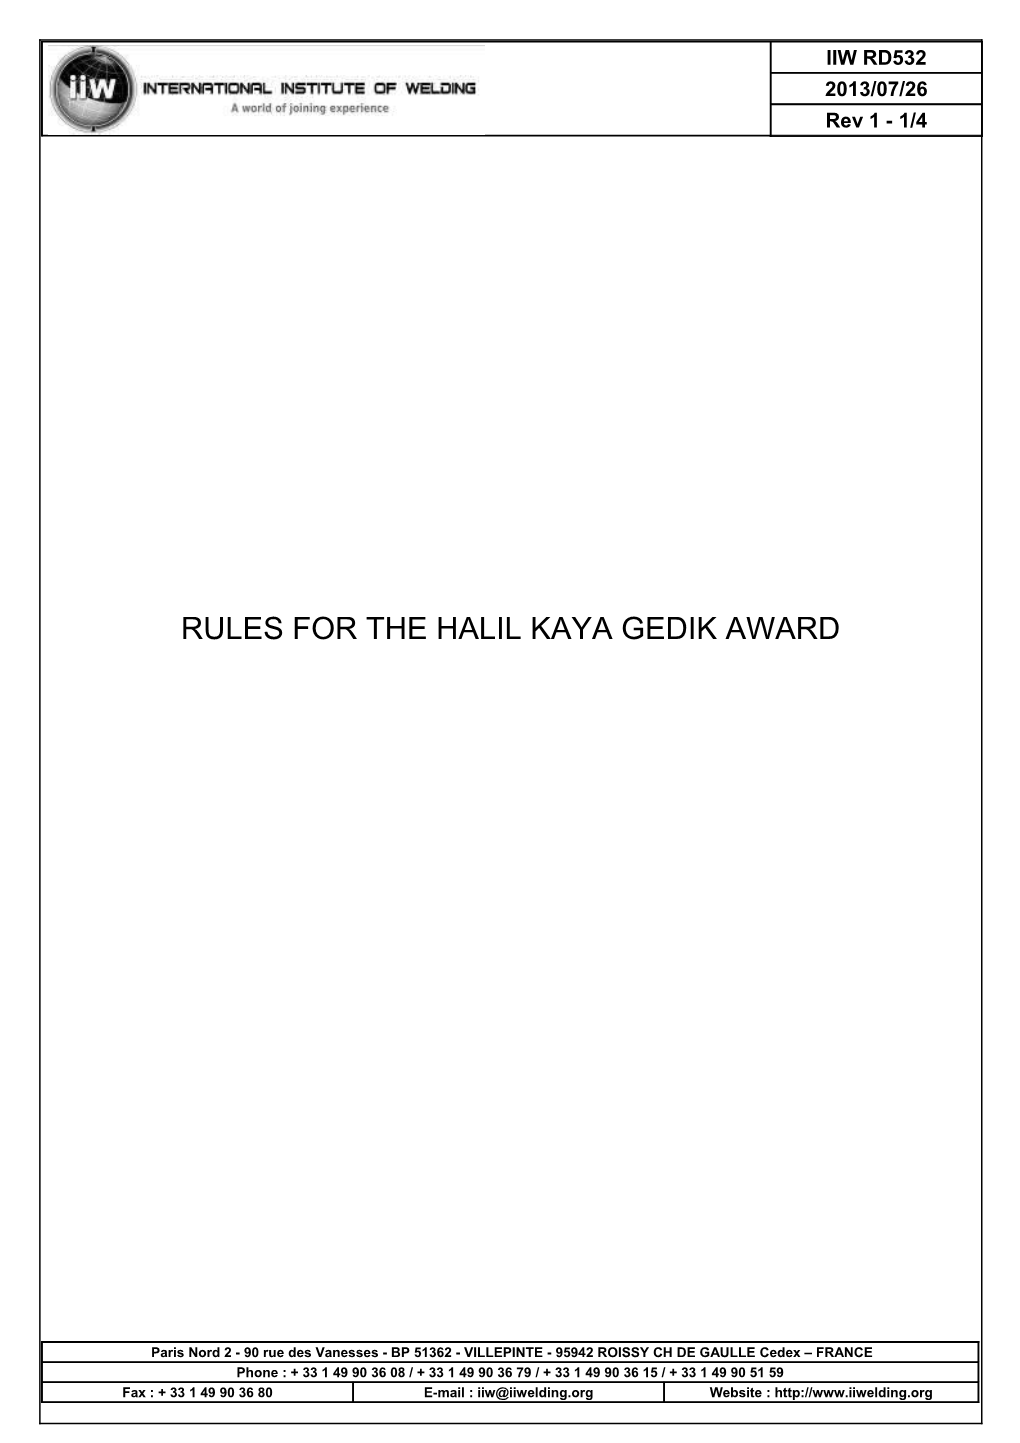 Rules for the Halil Kaya Gedik Award